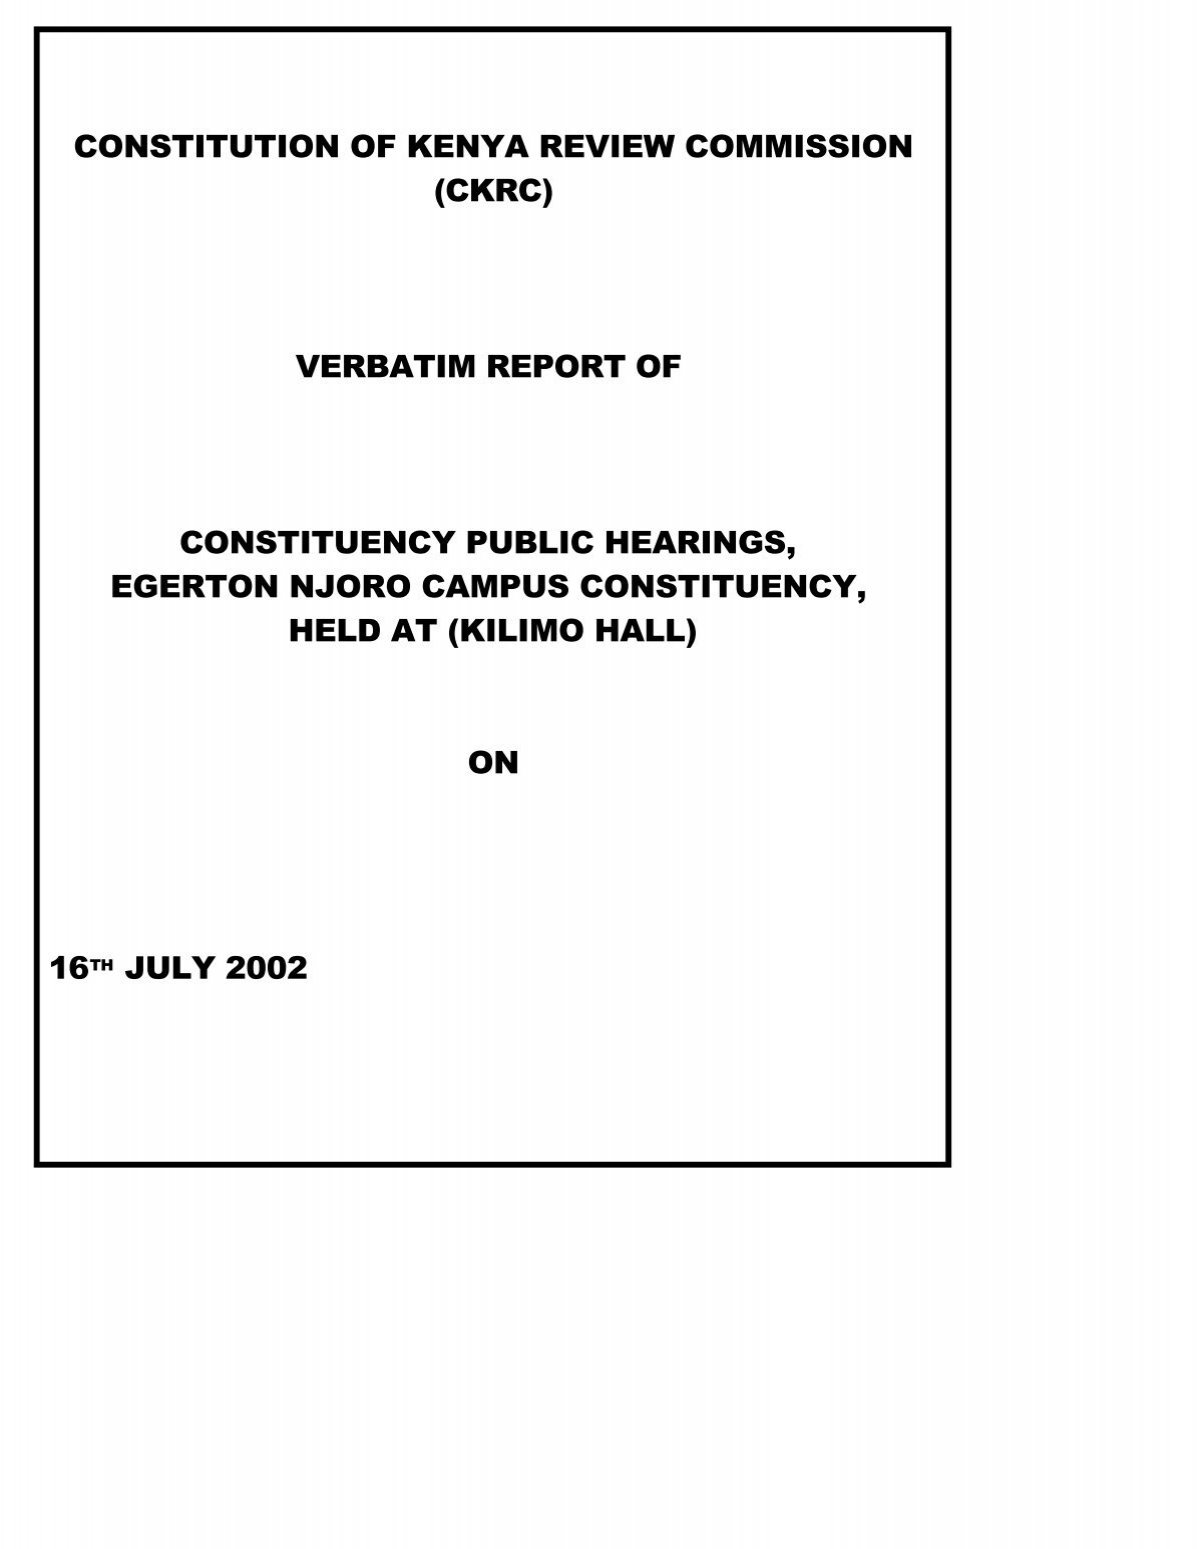 Verbatim report of proceedings - Wednesday, 15 January 2020